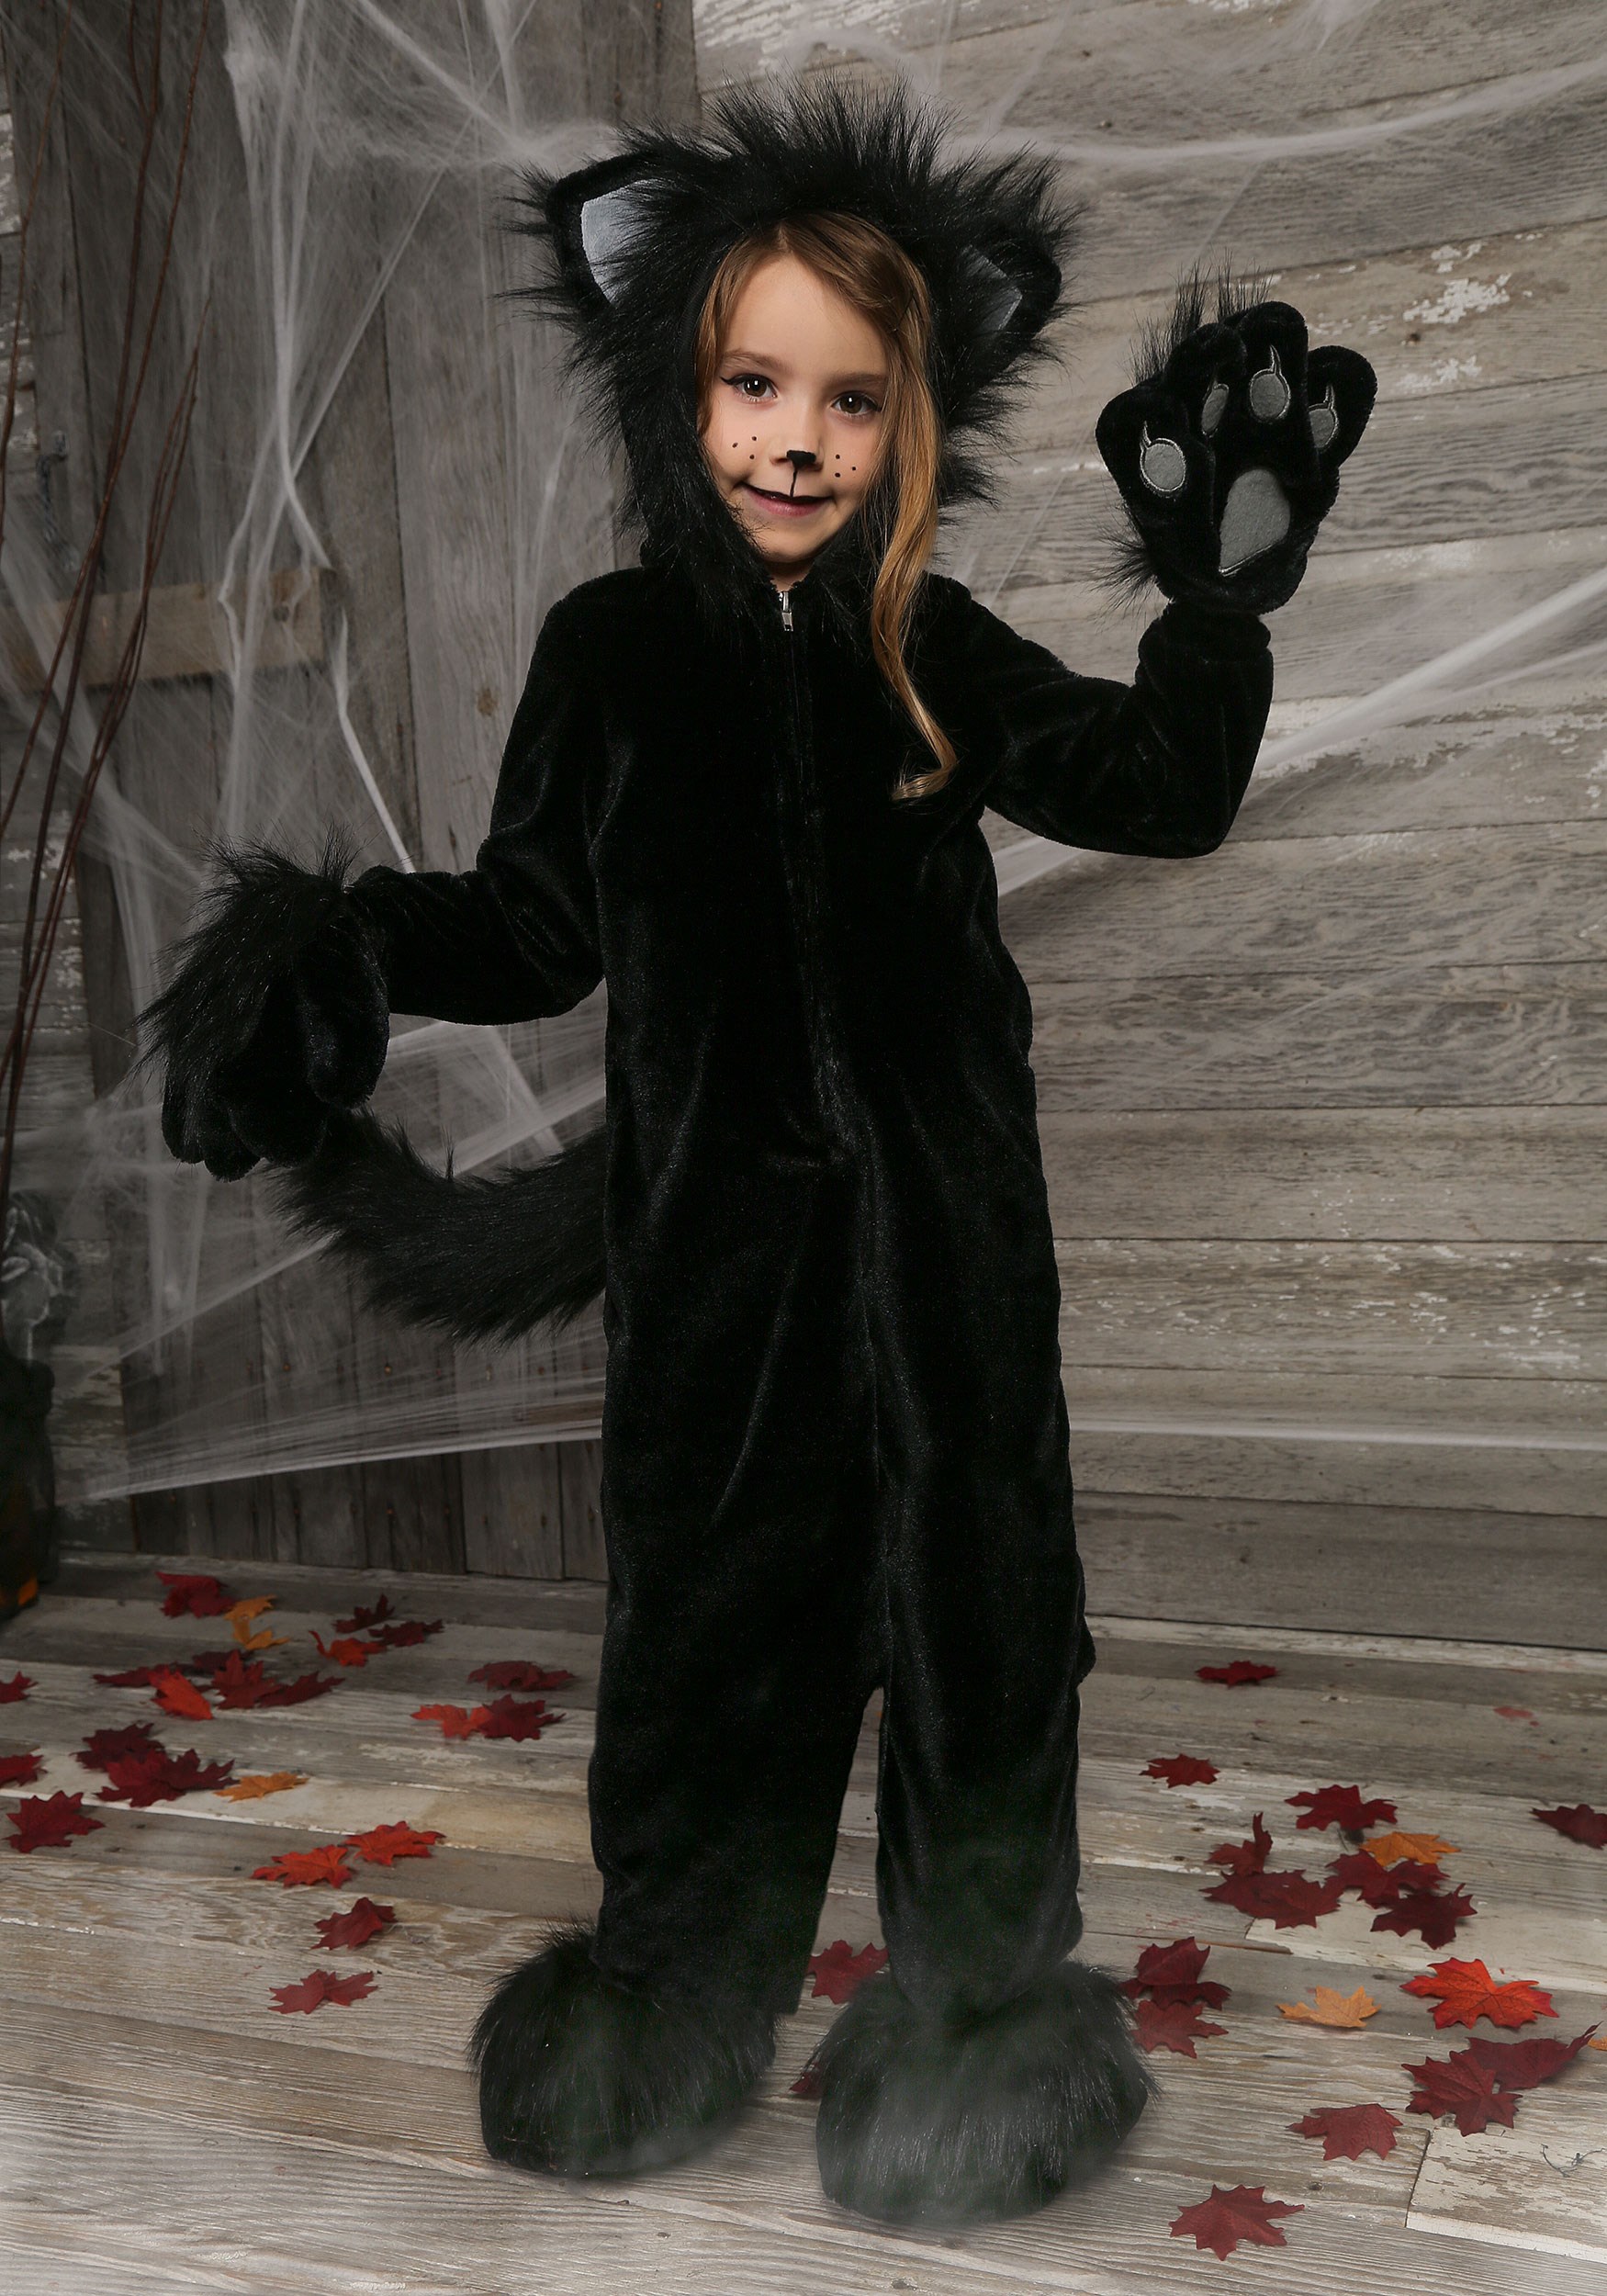 black cat costumes for women